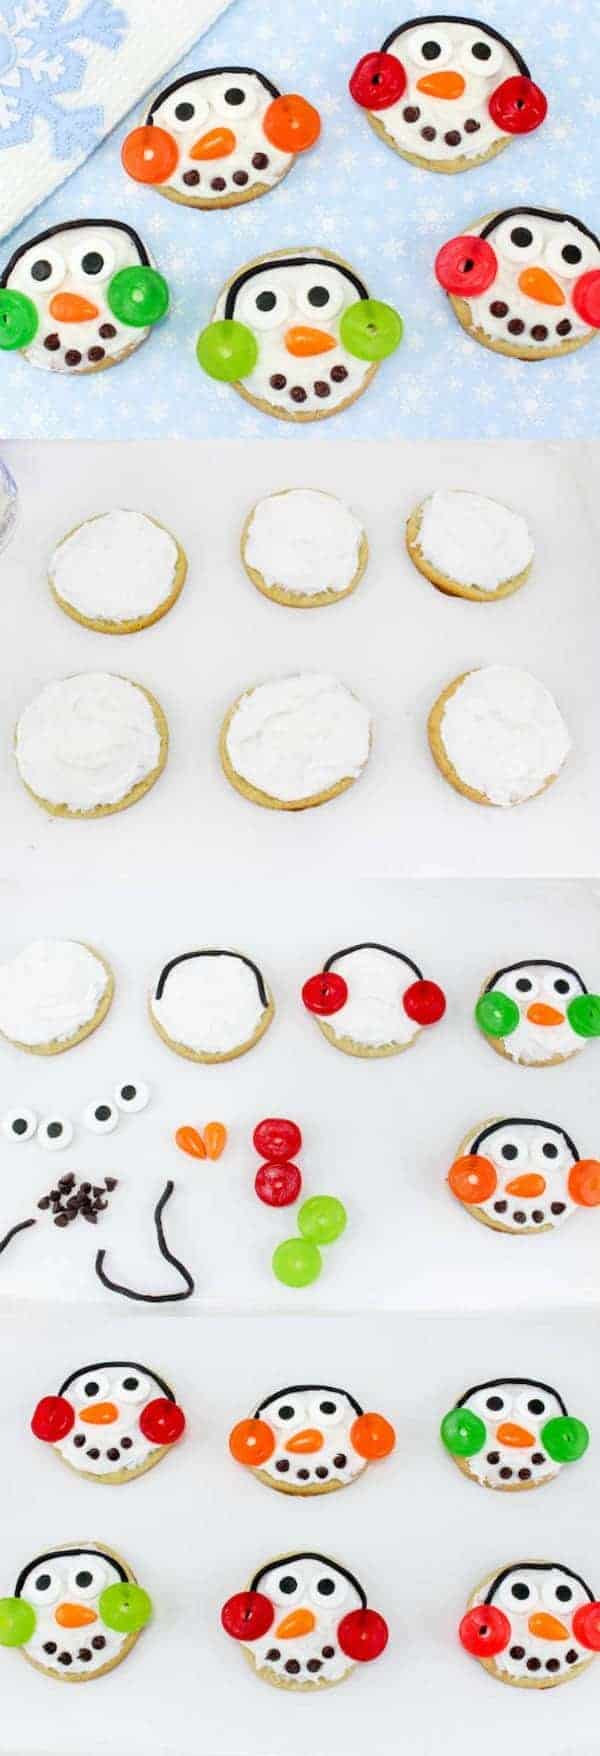 How to make Snowman Sugar Cookies